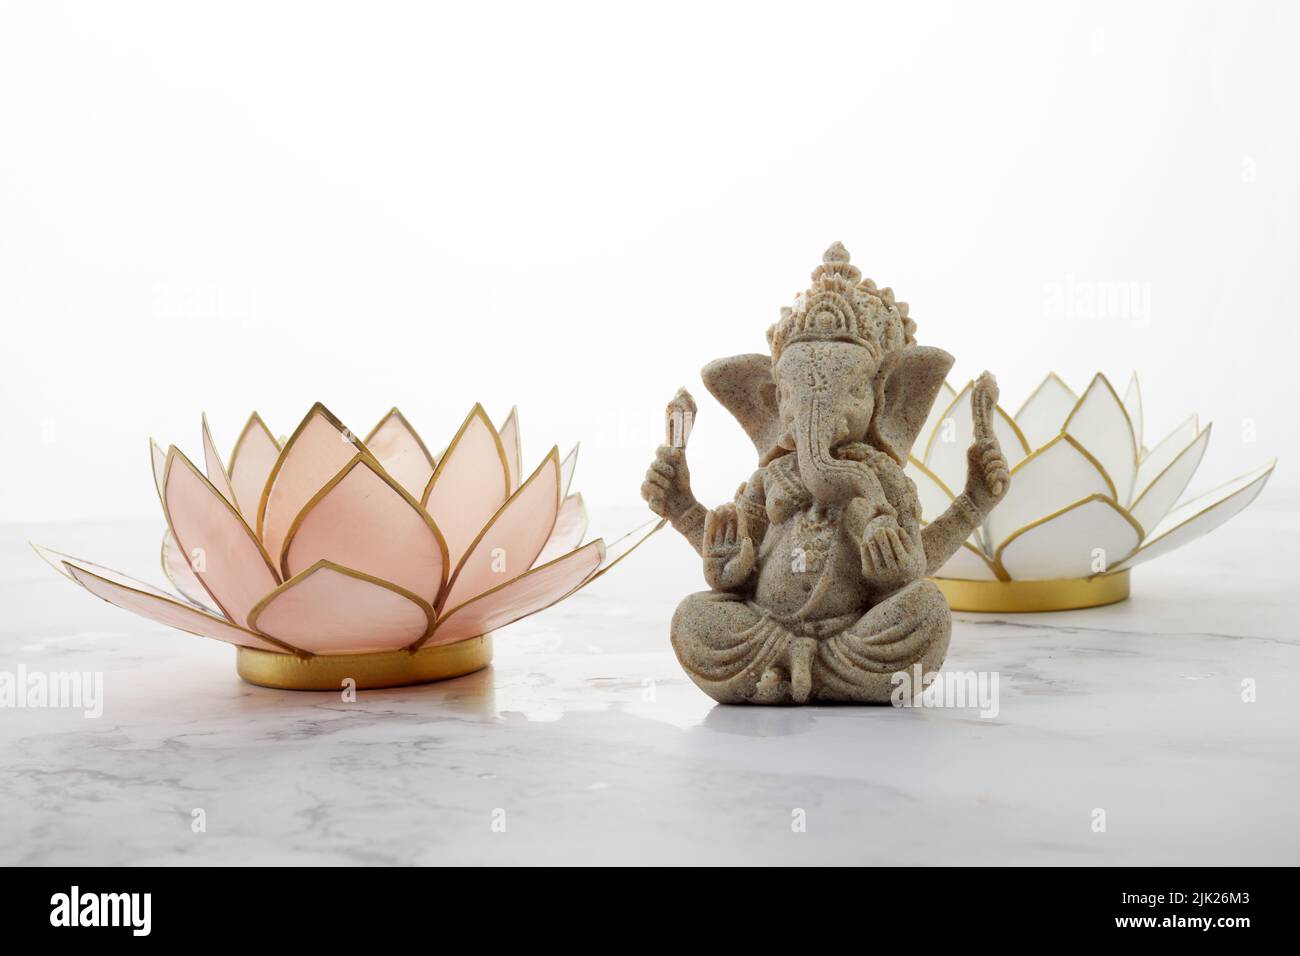 Happy Ganesh Chaturthi festival, Lord Ganesha statue with lotus on marble background, Stock Photo